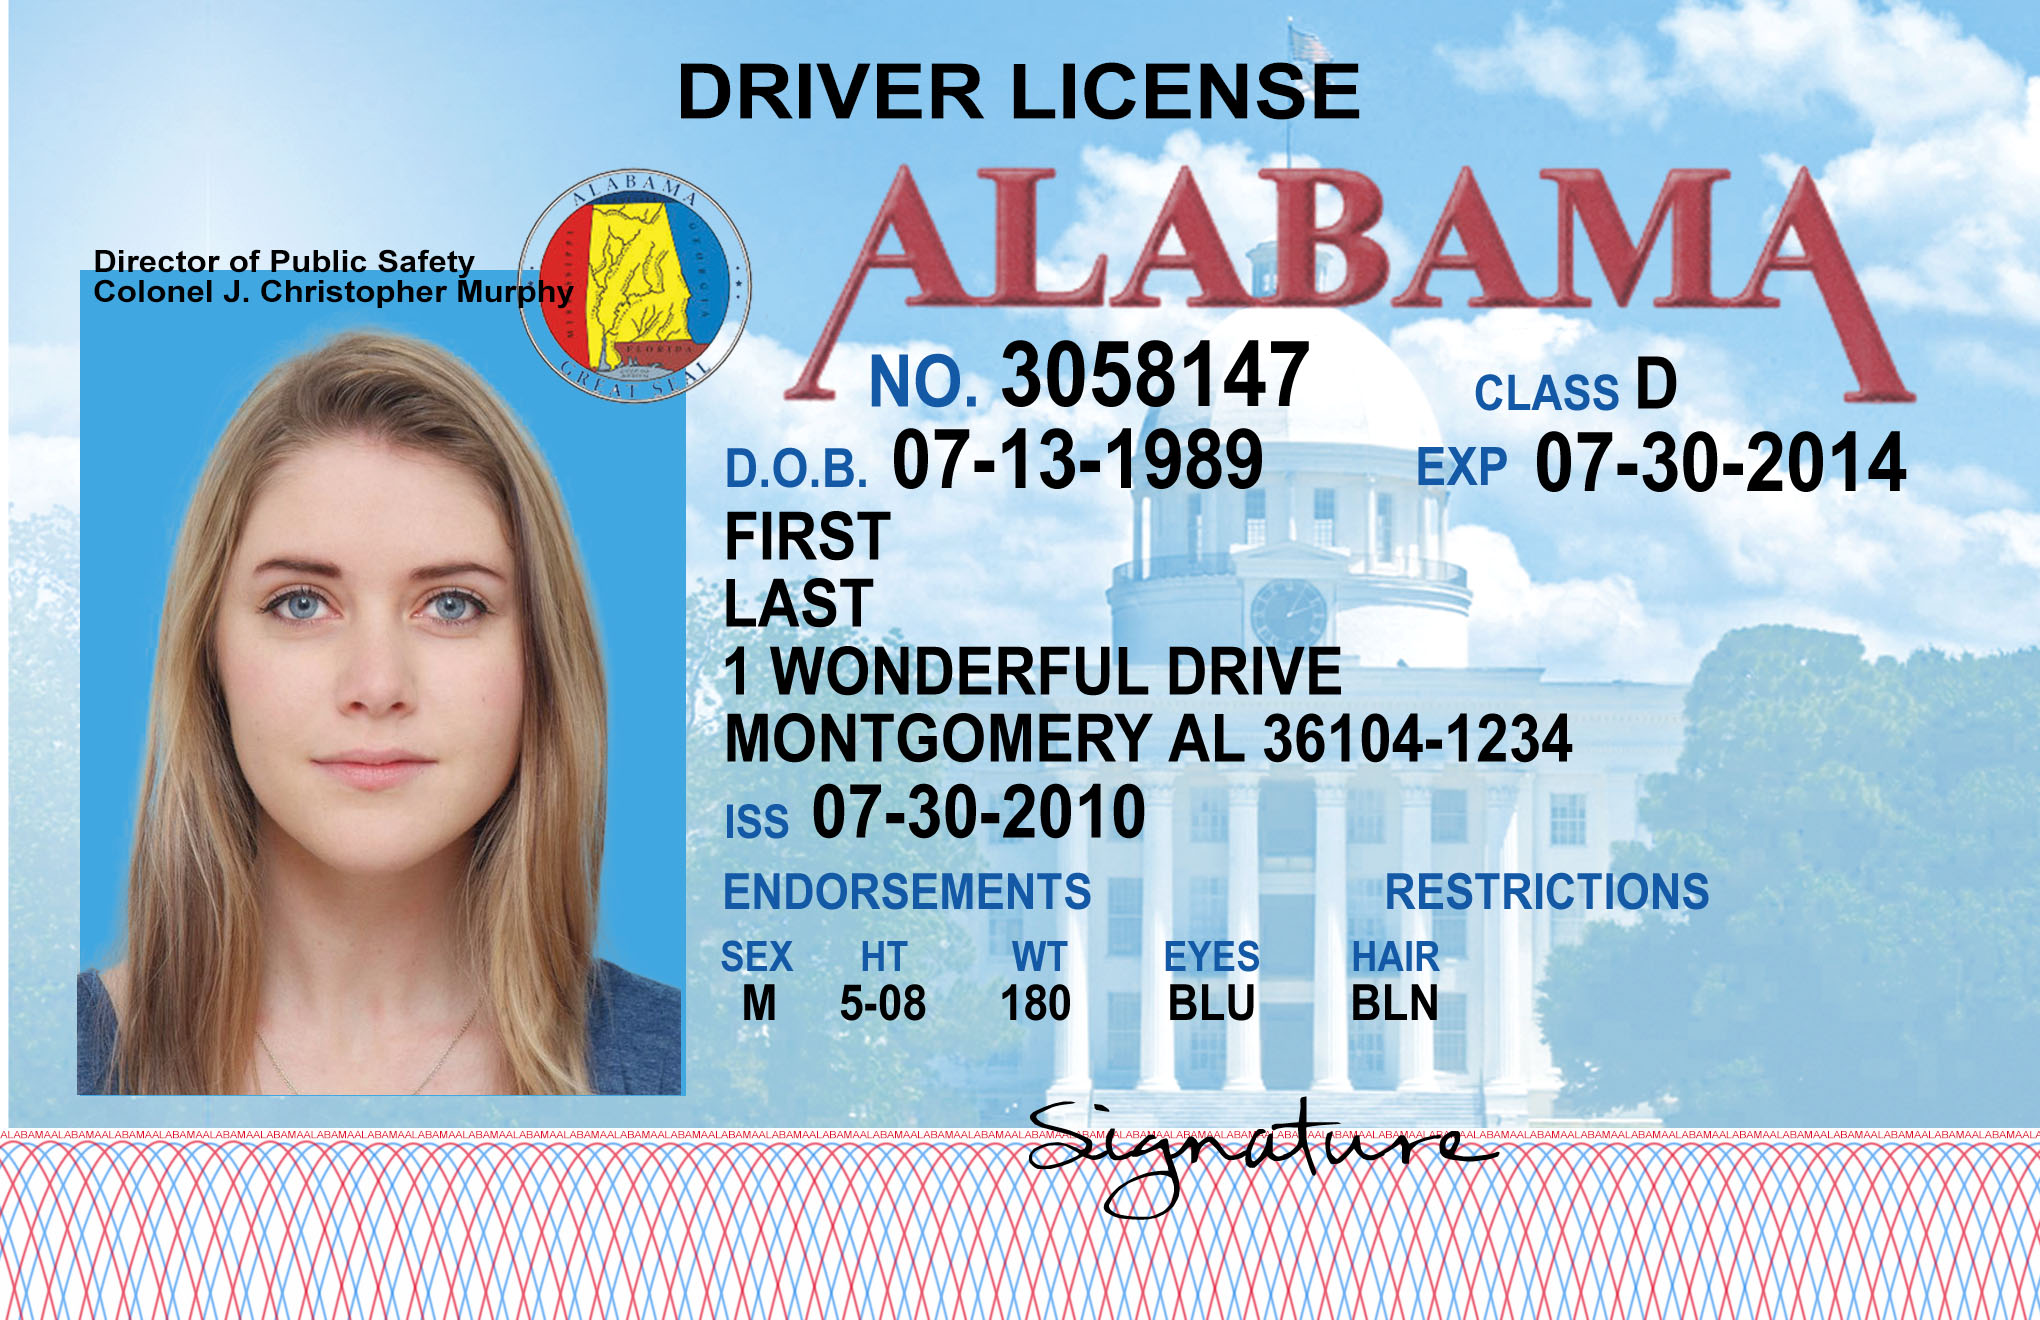 Alabama Driver License PSD Template.